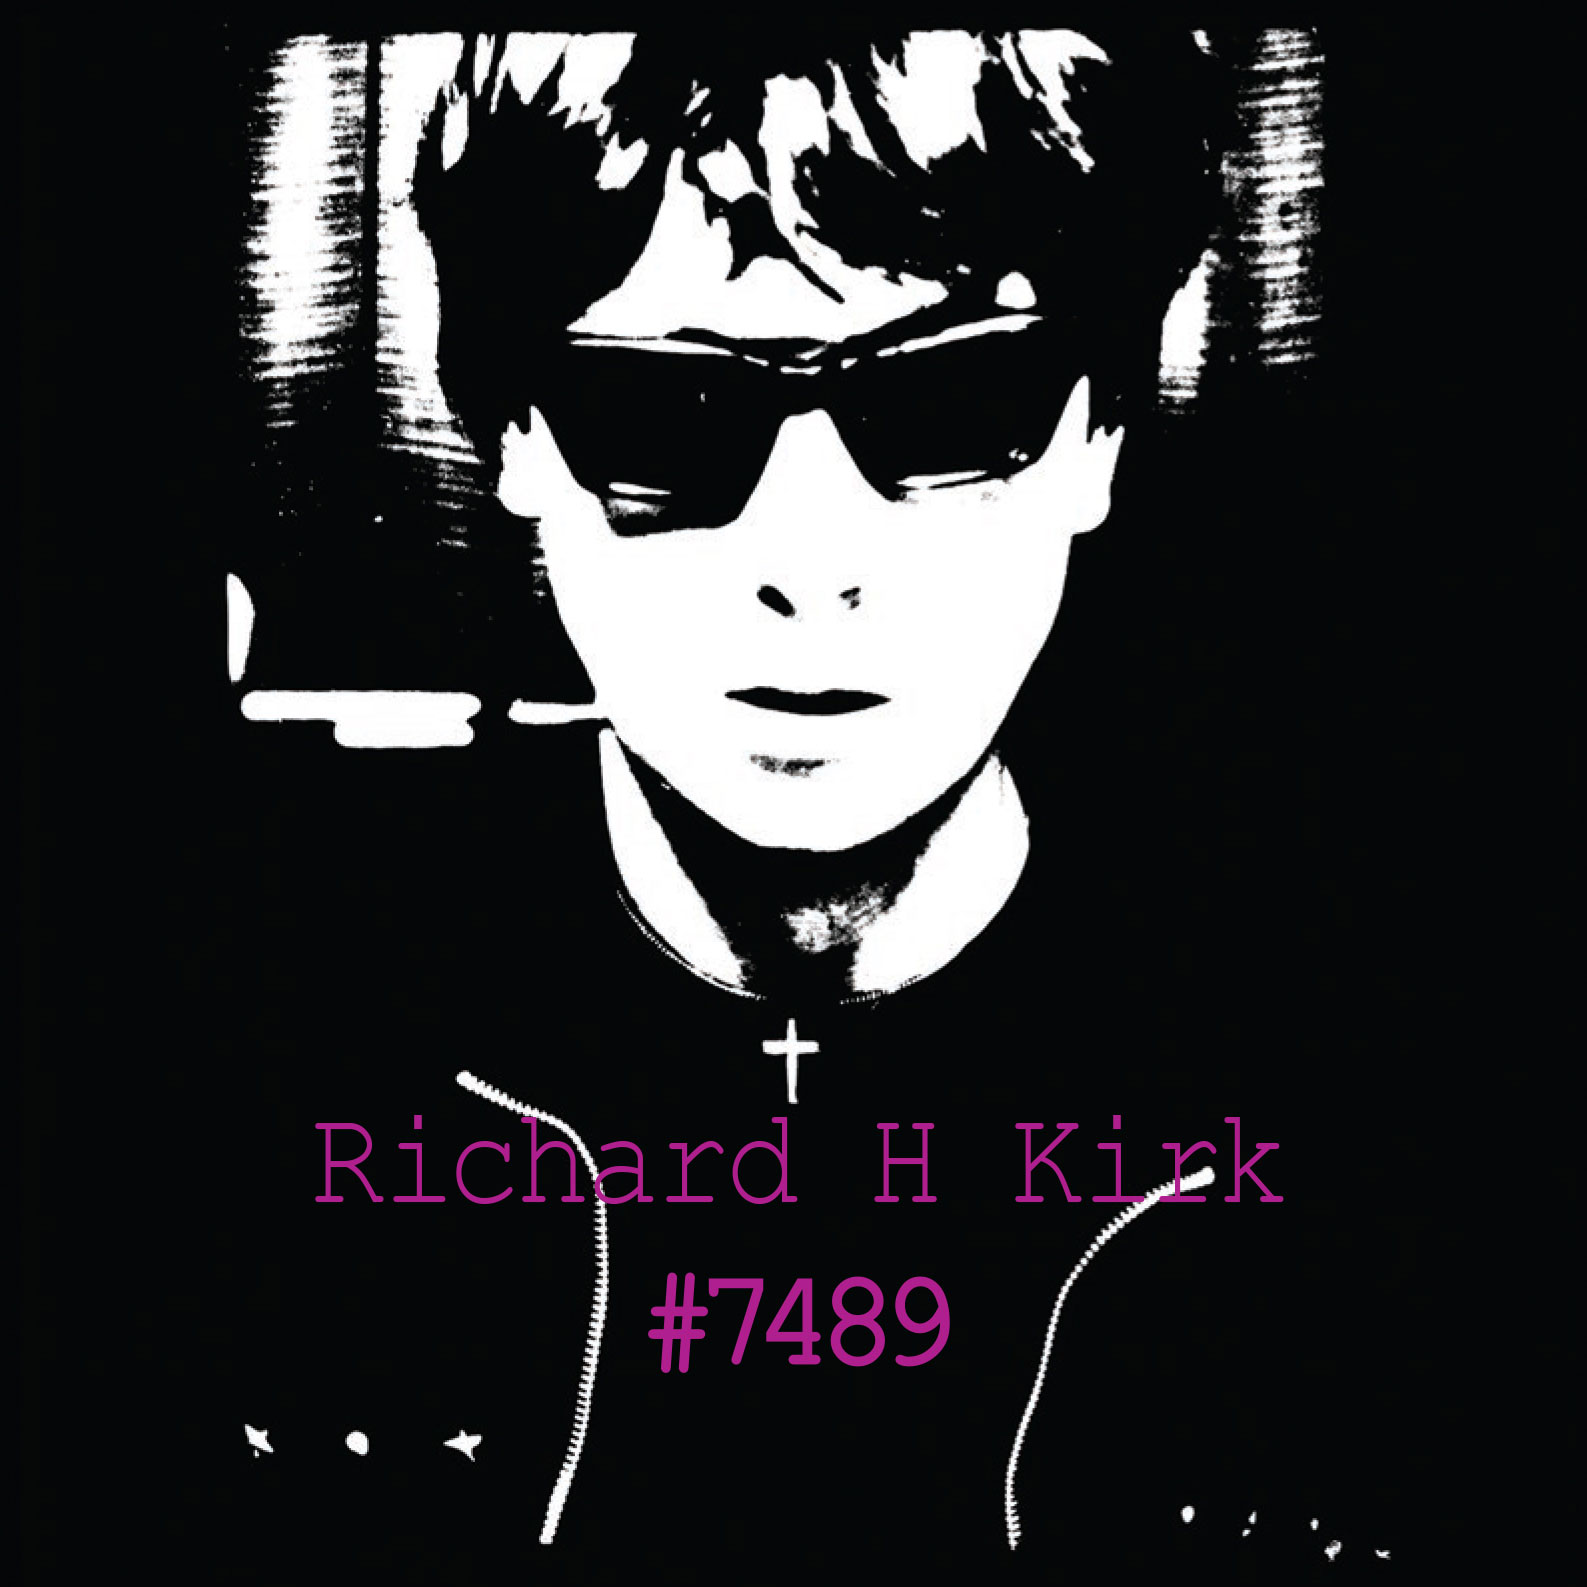 richard-h-kirk